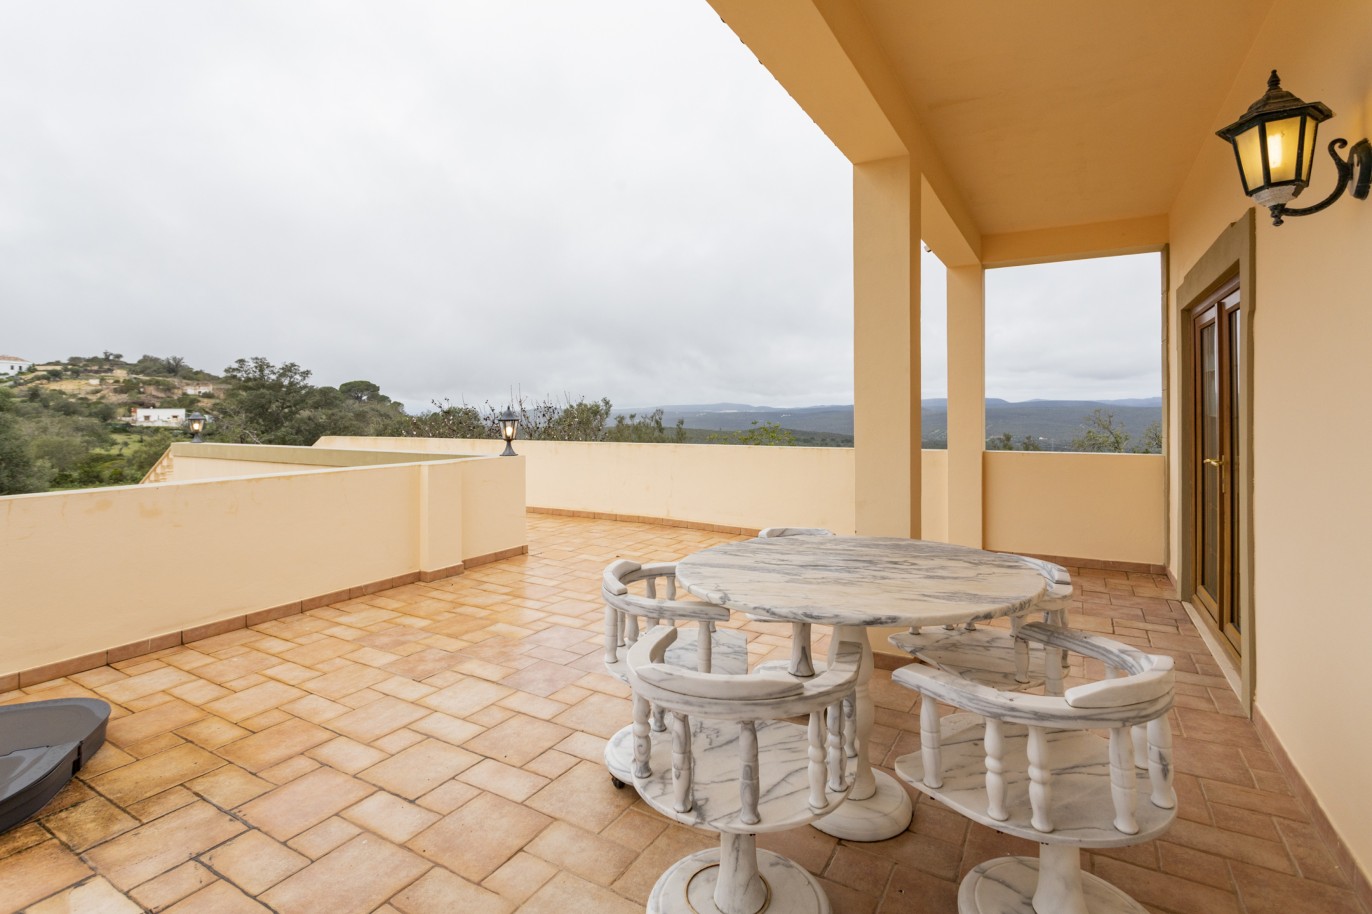 4 Bedroom Villa with swimming pool for sale in Loulé, Algarve_214796